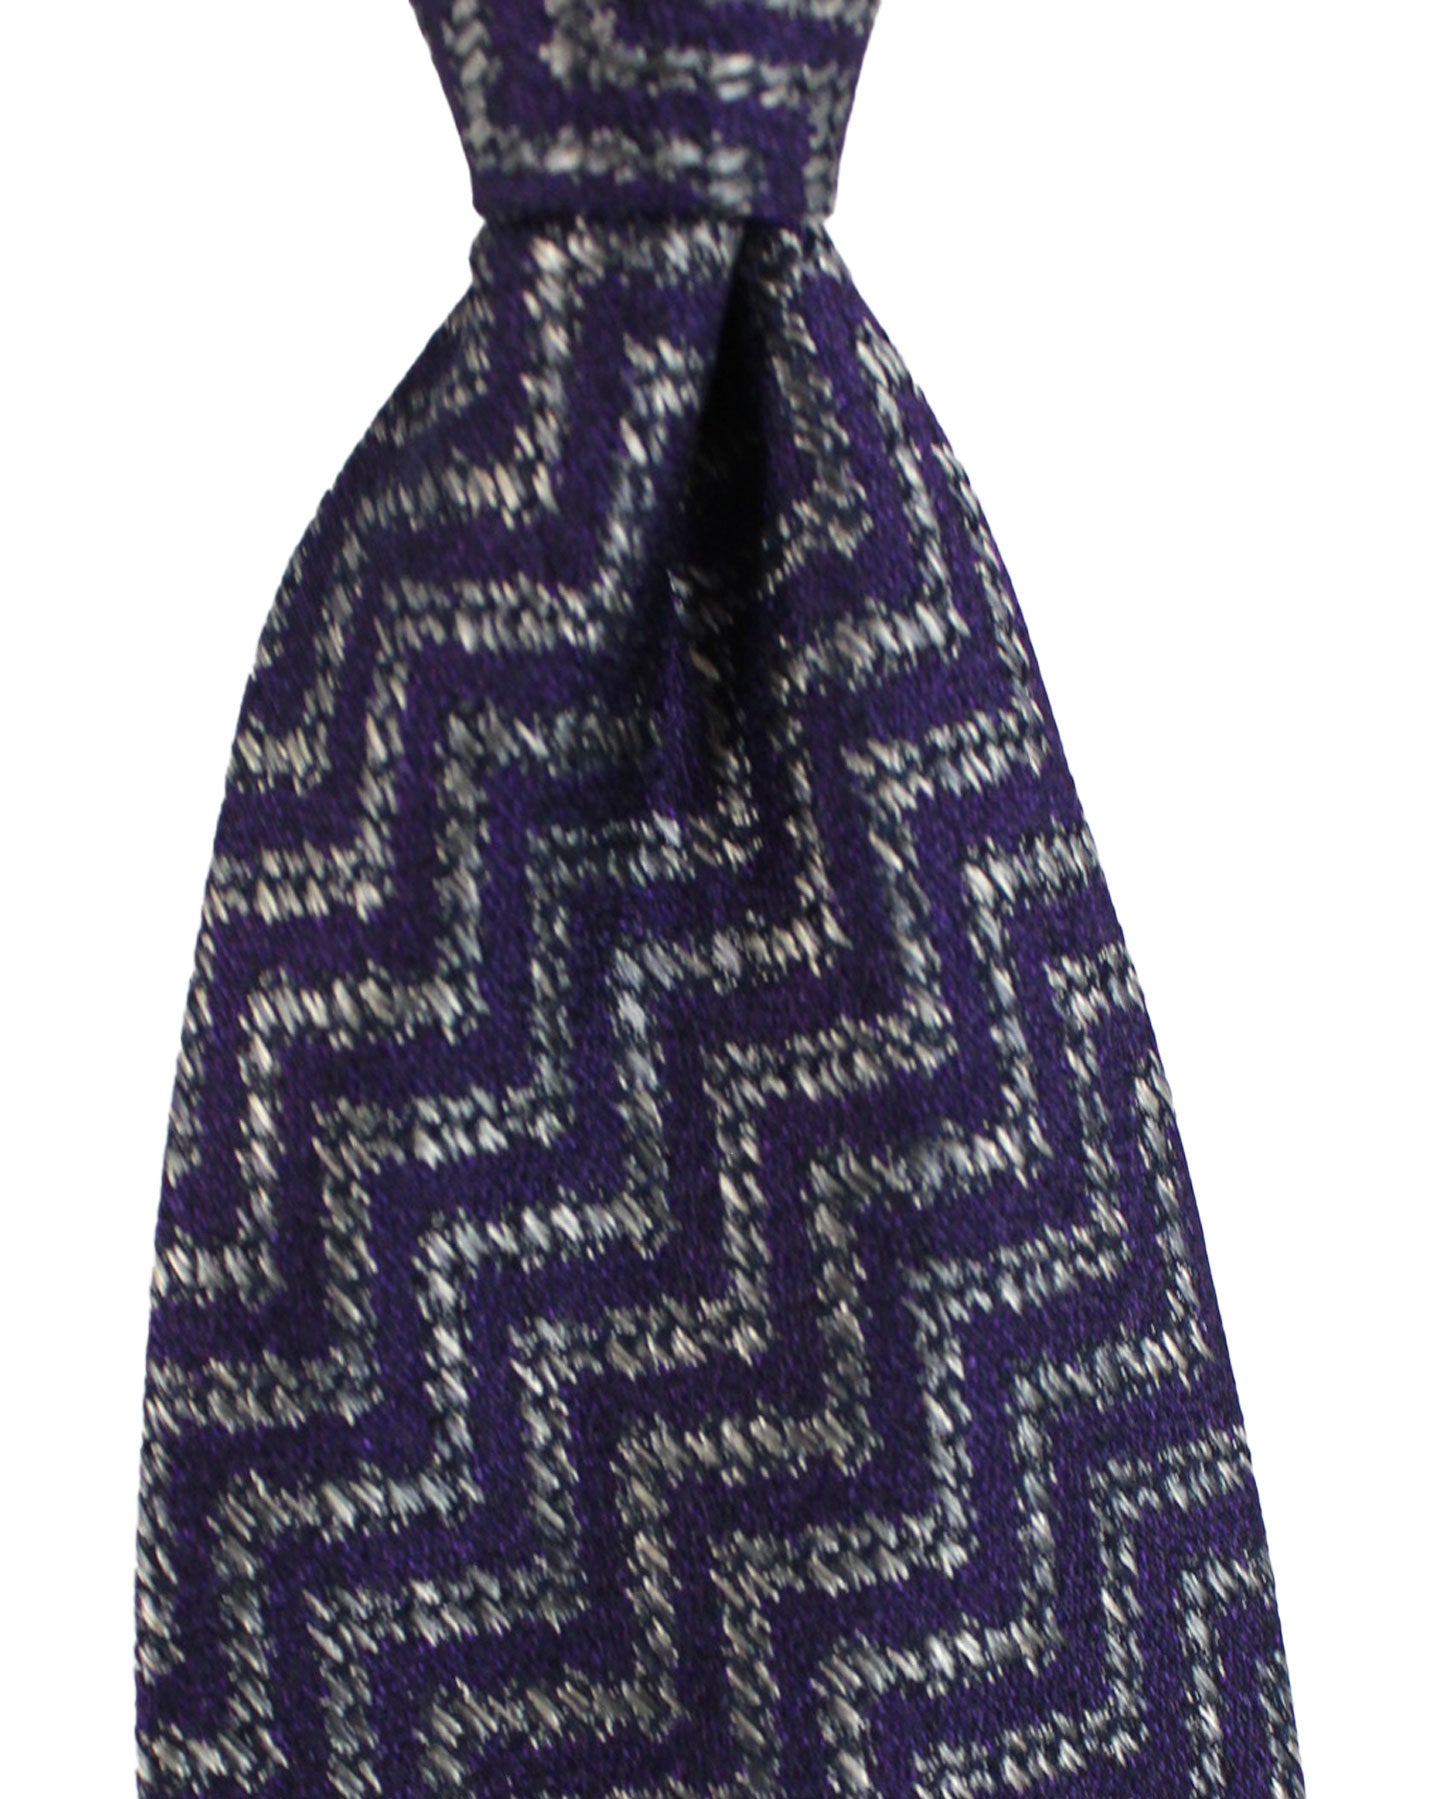 Missoni Necktie Purple Gray Zig Zag Design